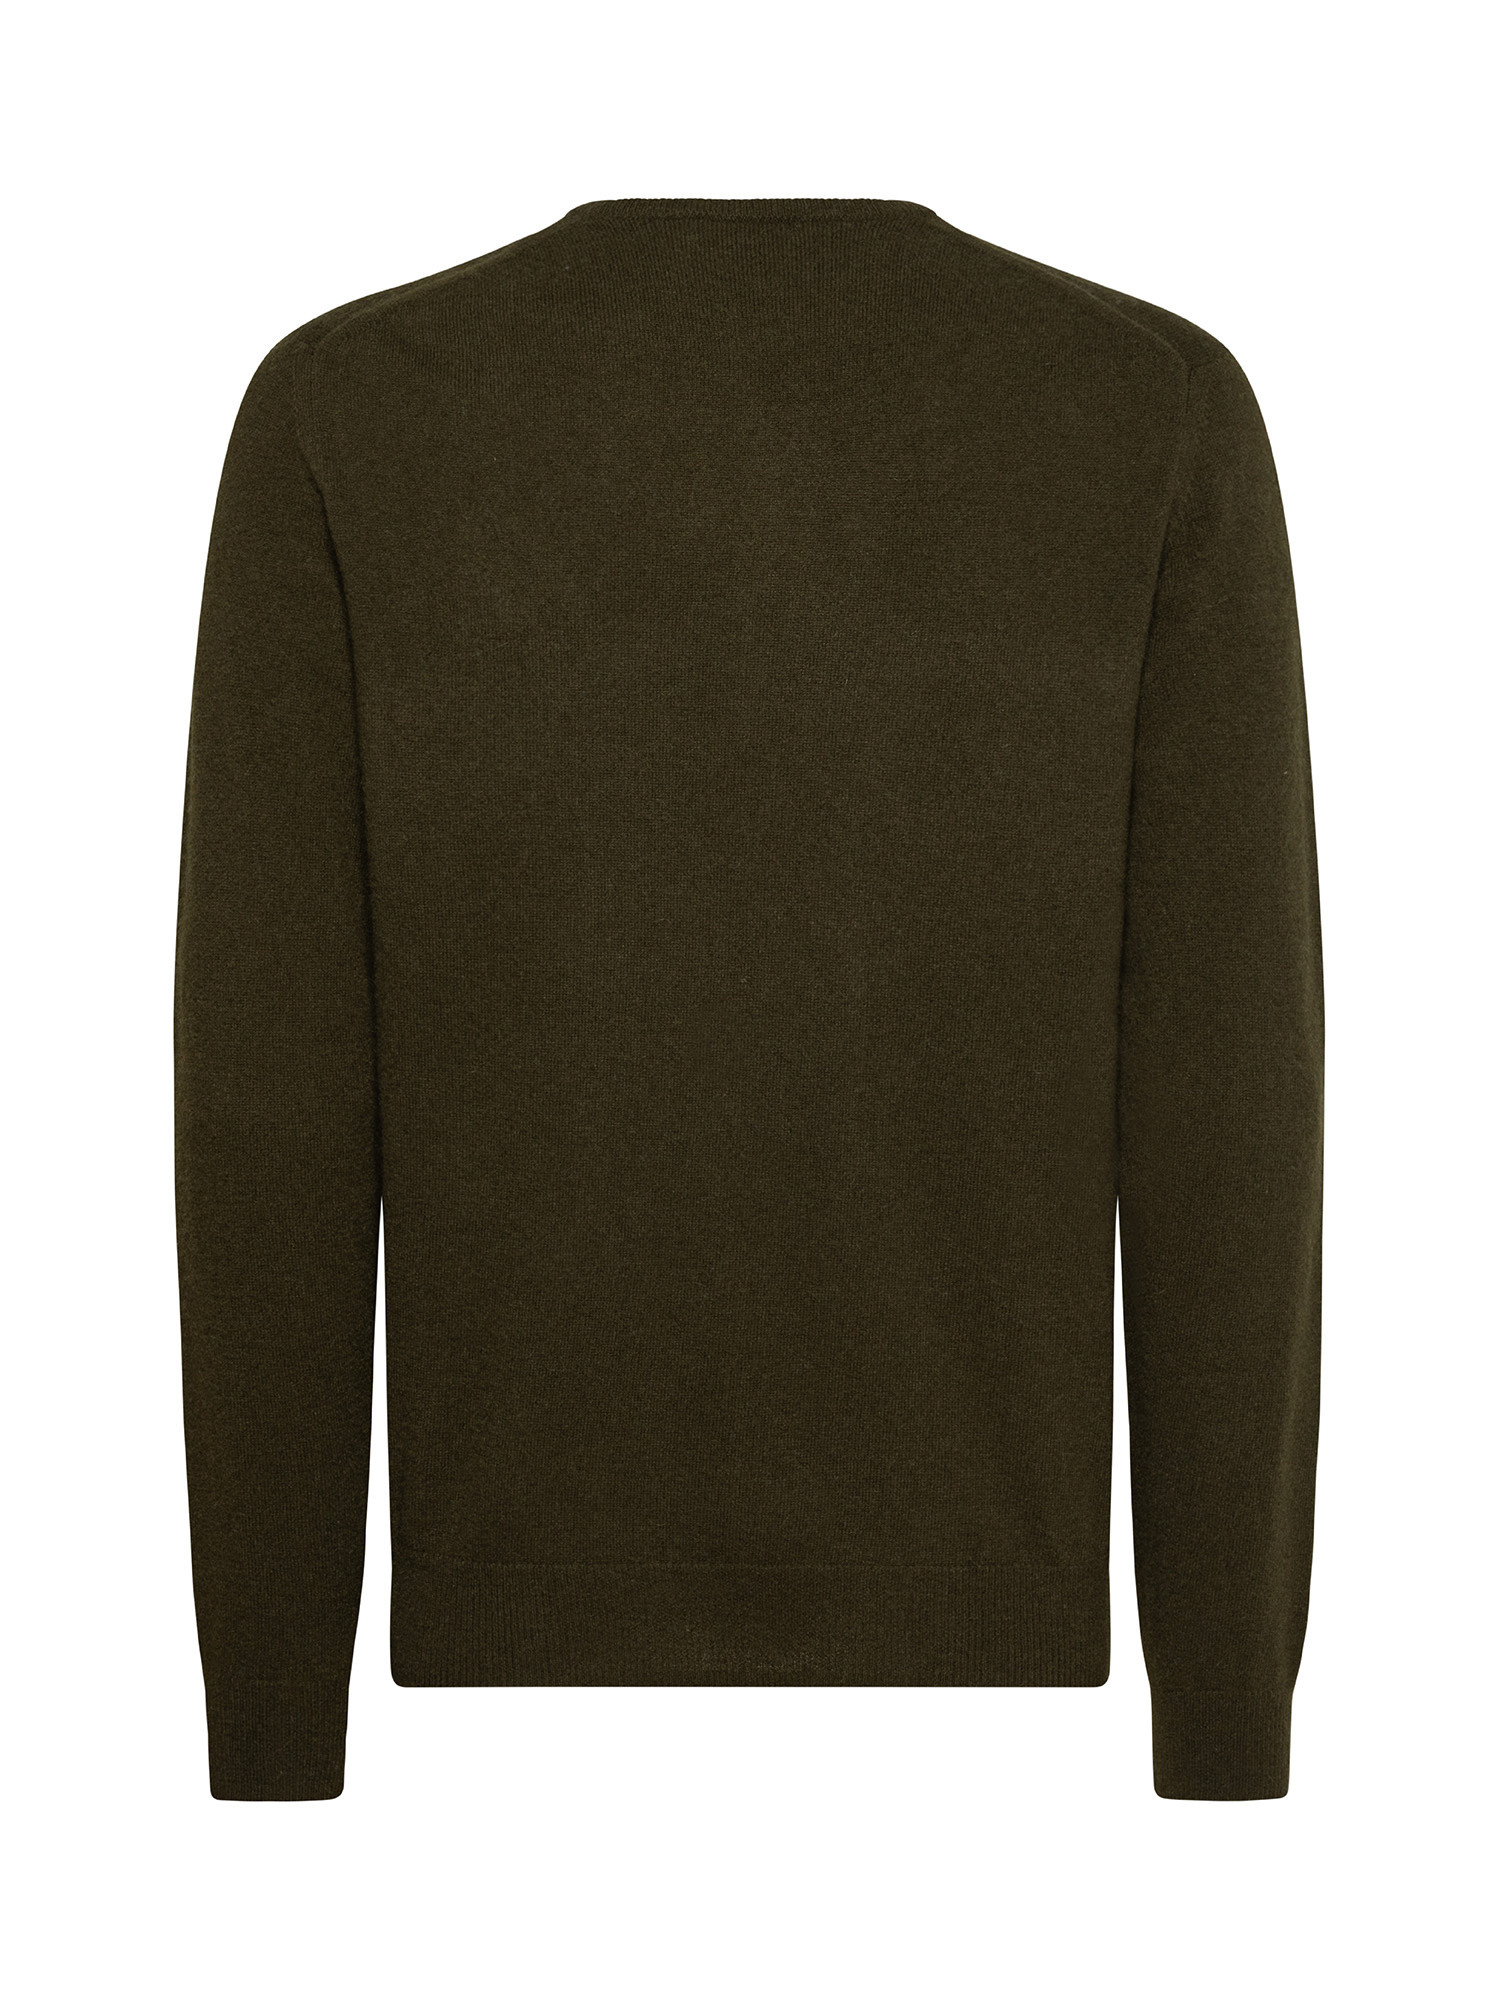 Pure cashmere crewneck pullover, Dark Green, large image number 1